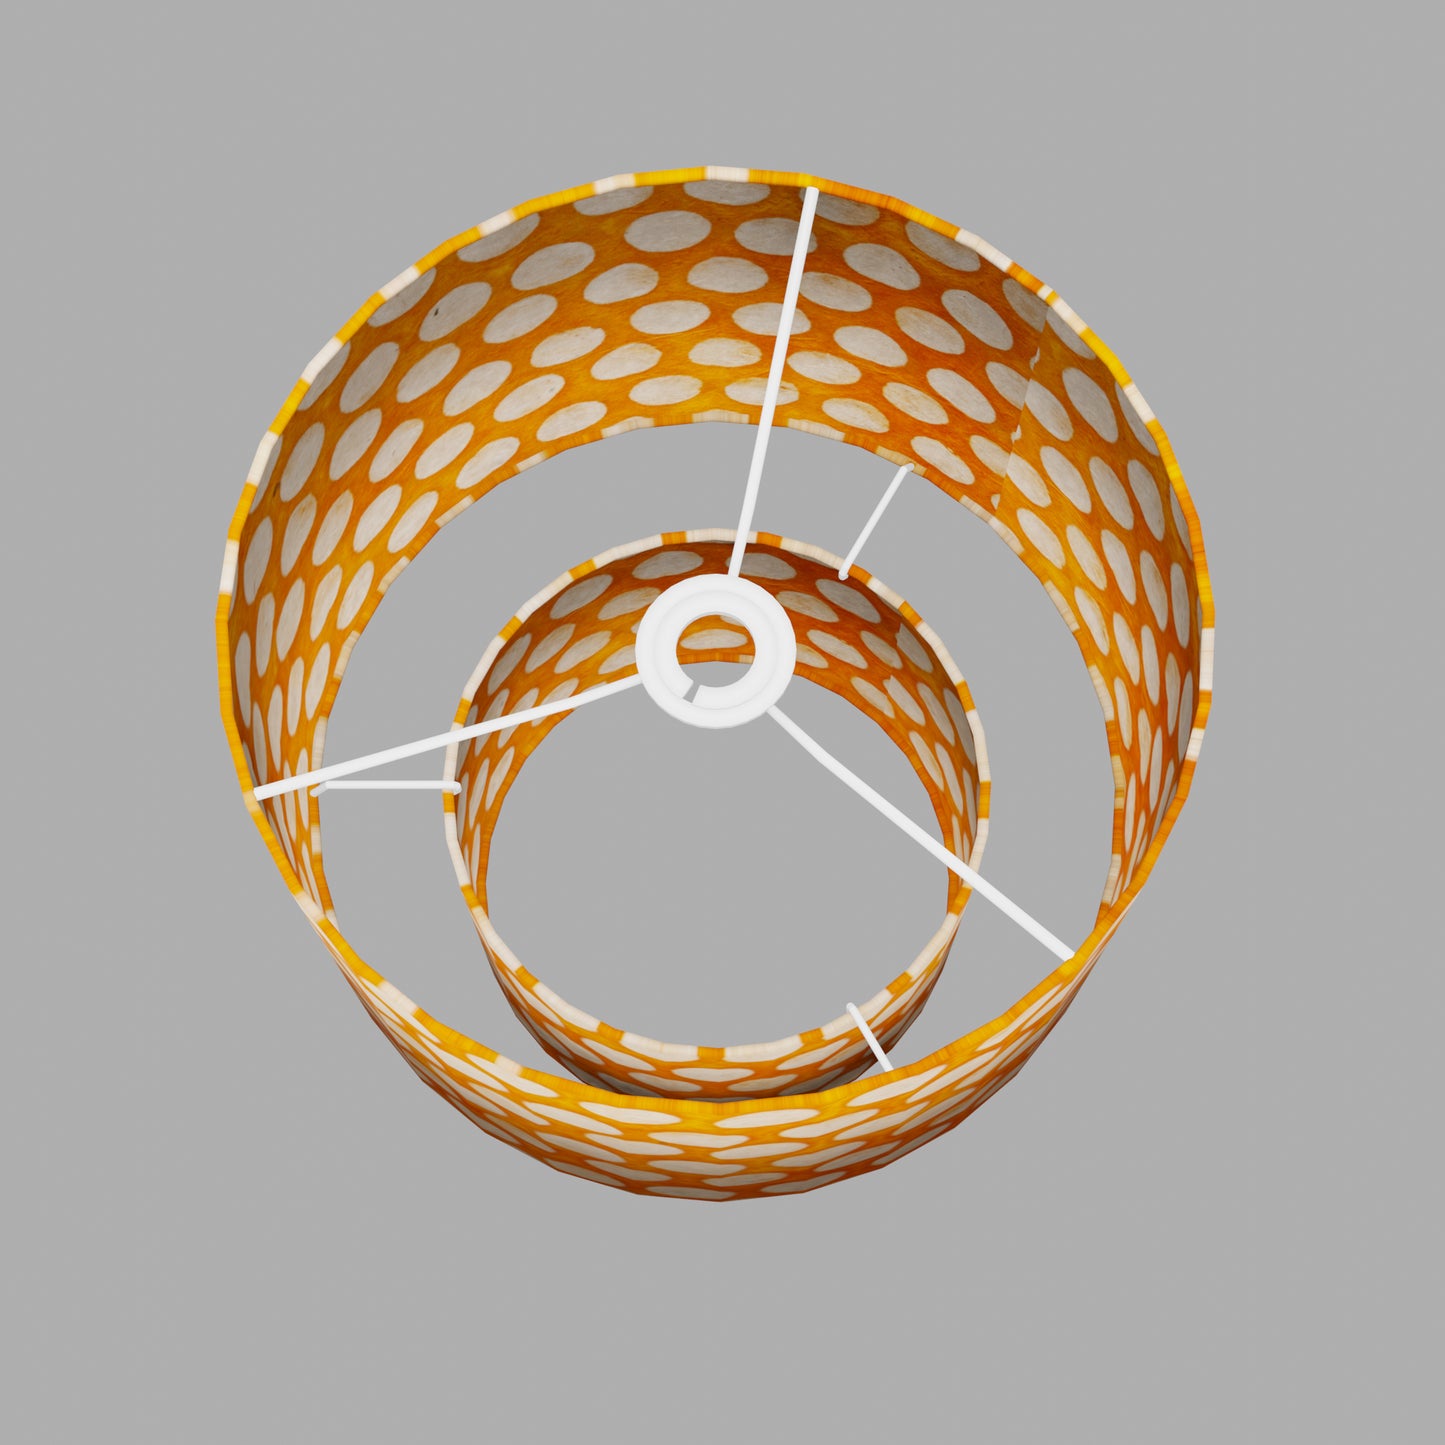 2 Tier Lamp Shade - B110 ~ Batik Dots on Orange, 30cm x 20cm & 20cm x 15cm